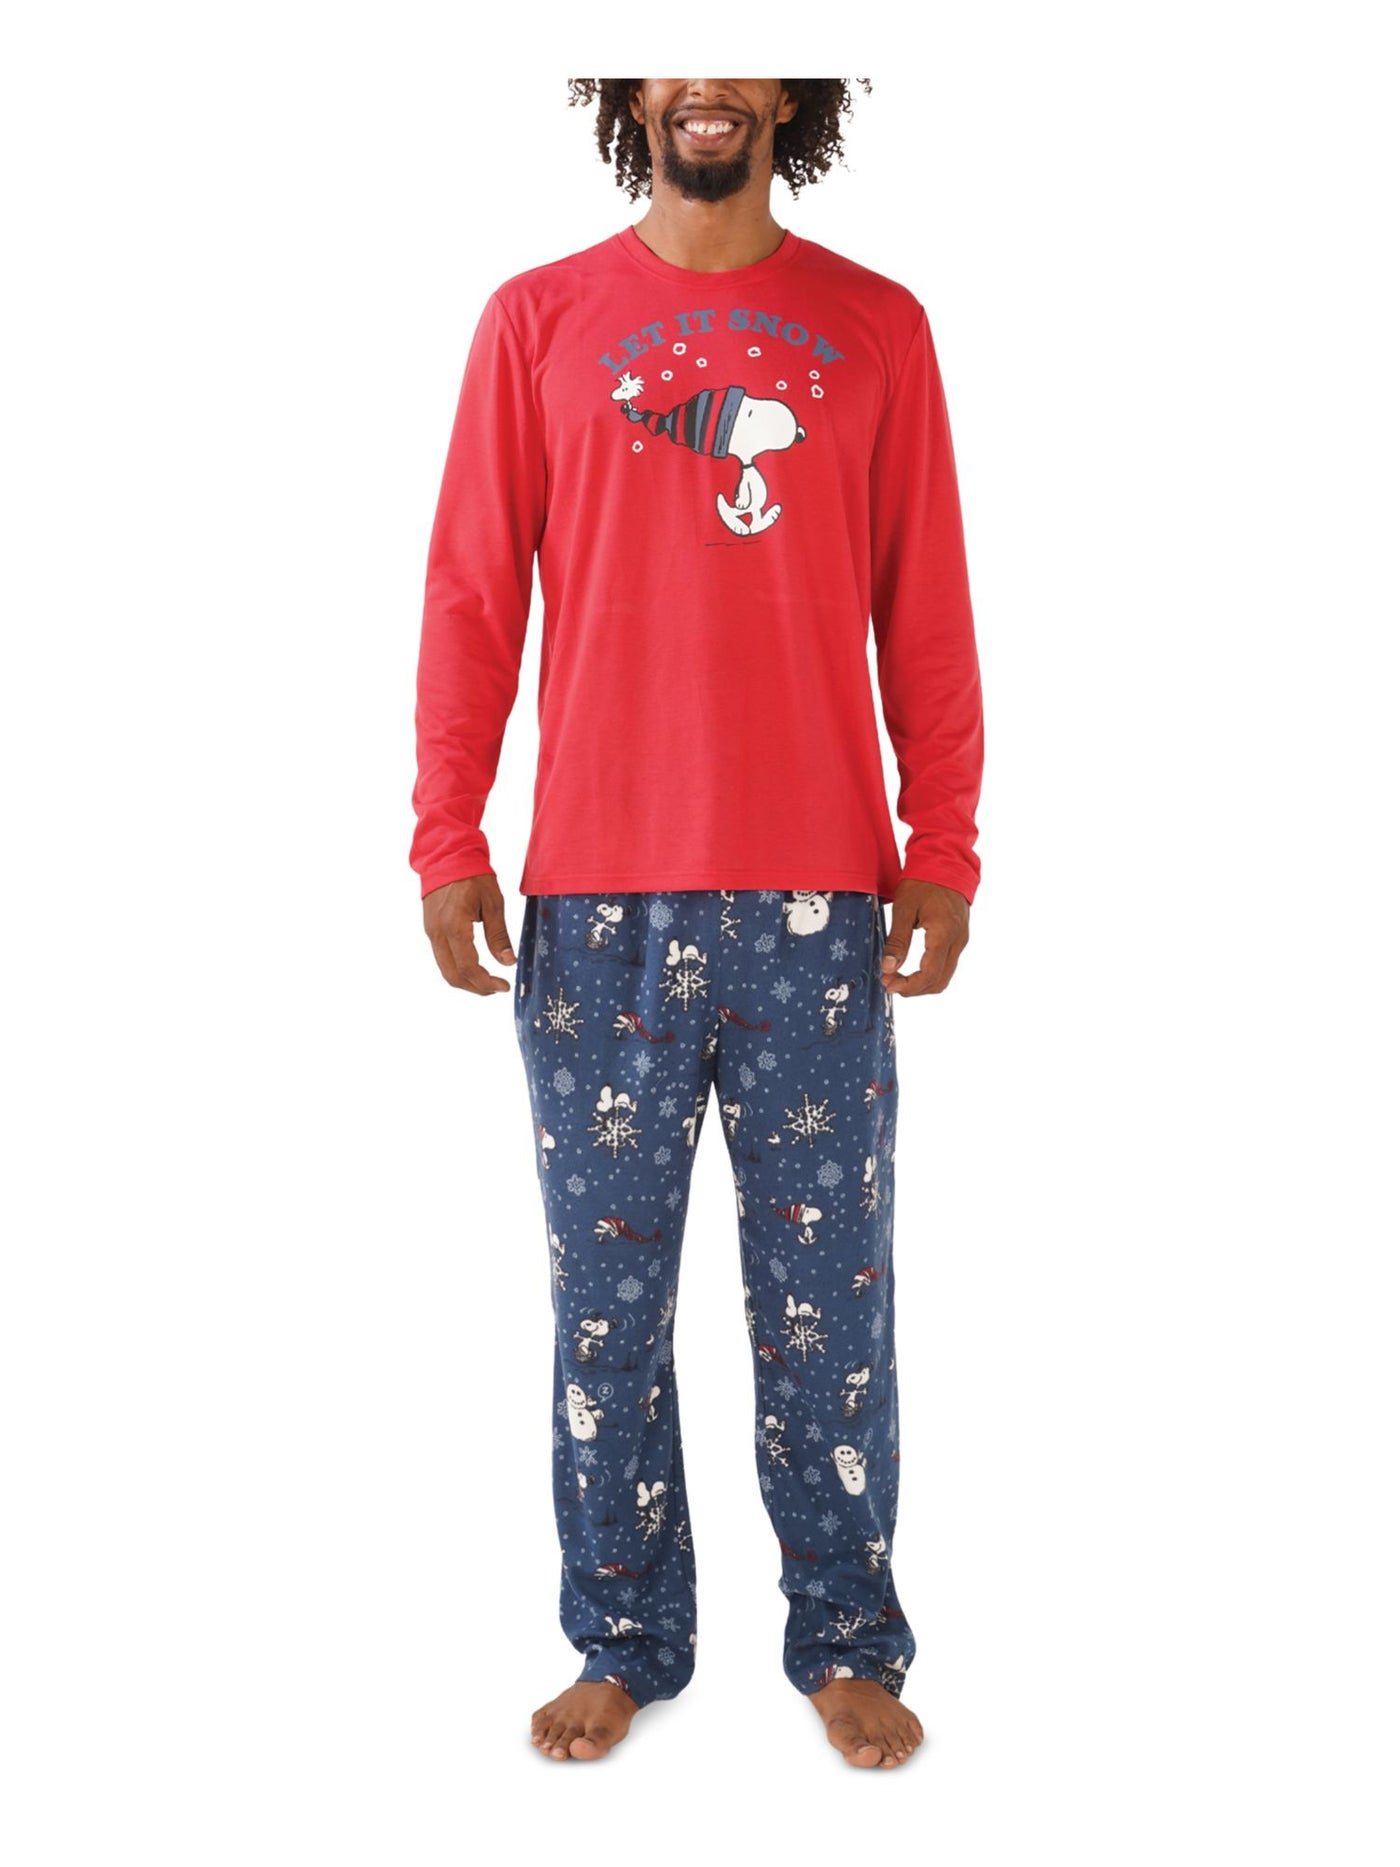 HYBRID APPAREL Mens Navy Graphic Elastic Band T-Shirt Top Straight leg Pants Pajamas S